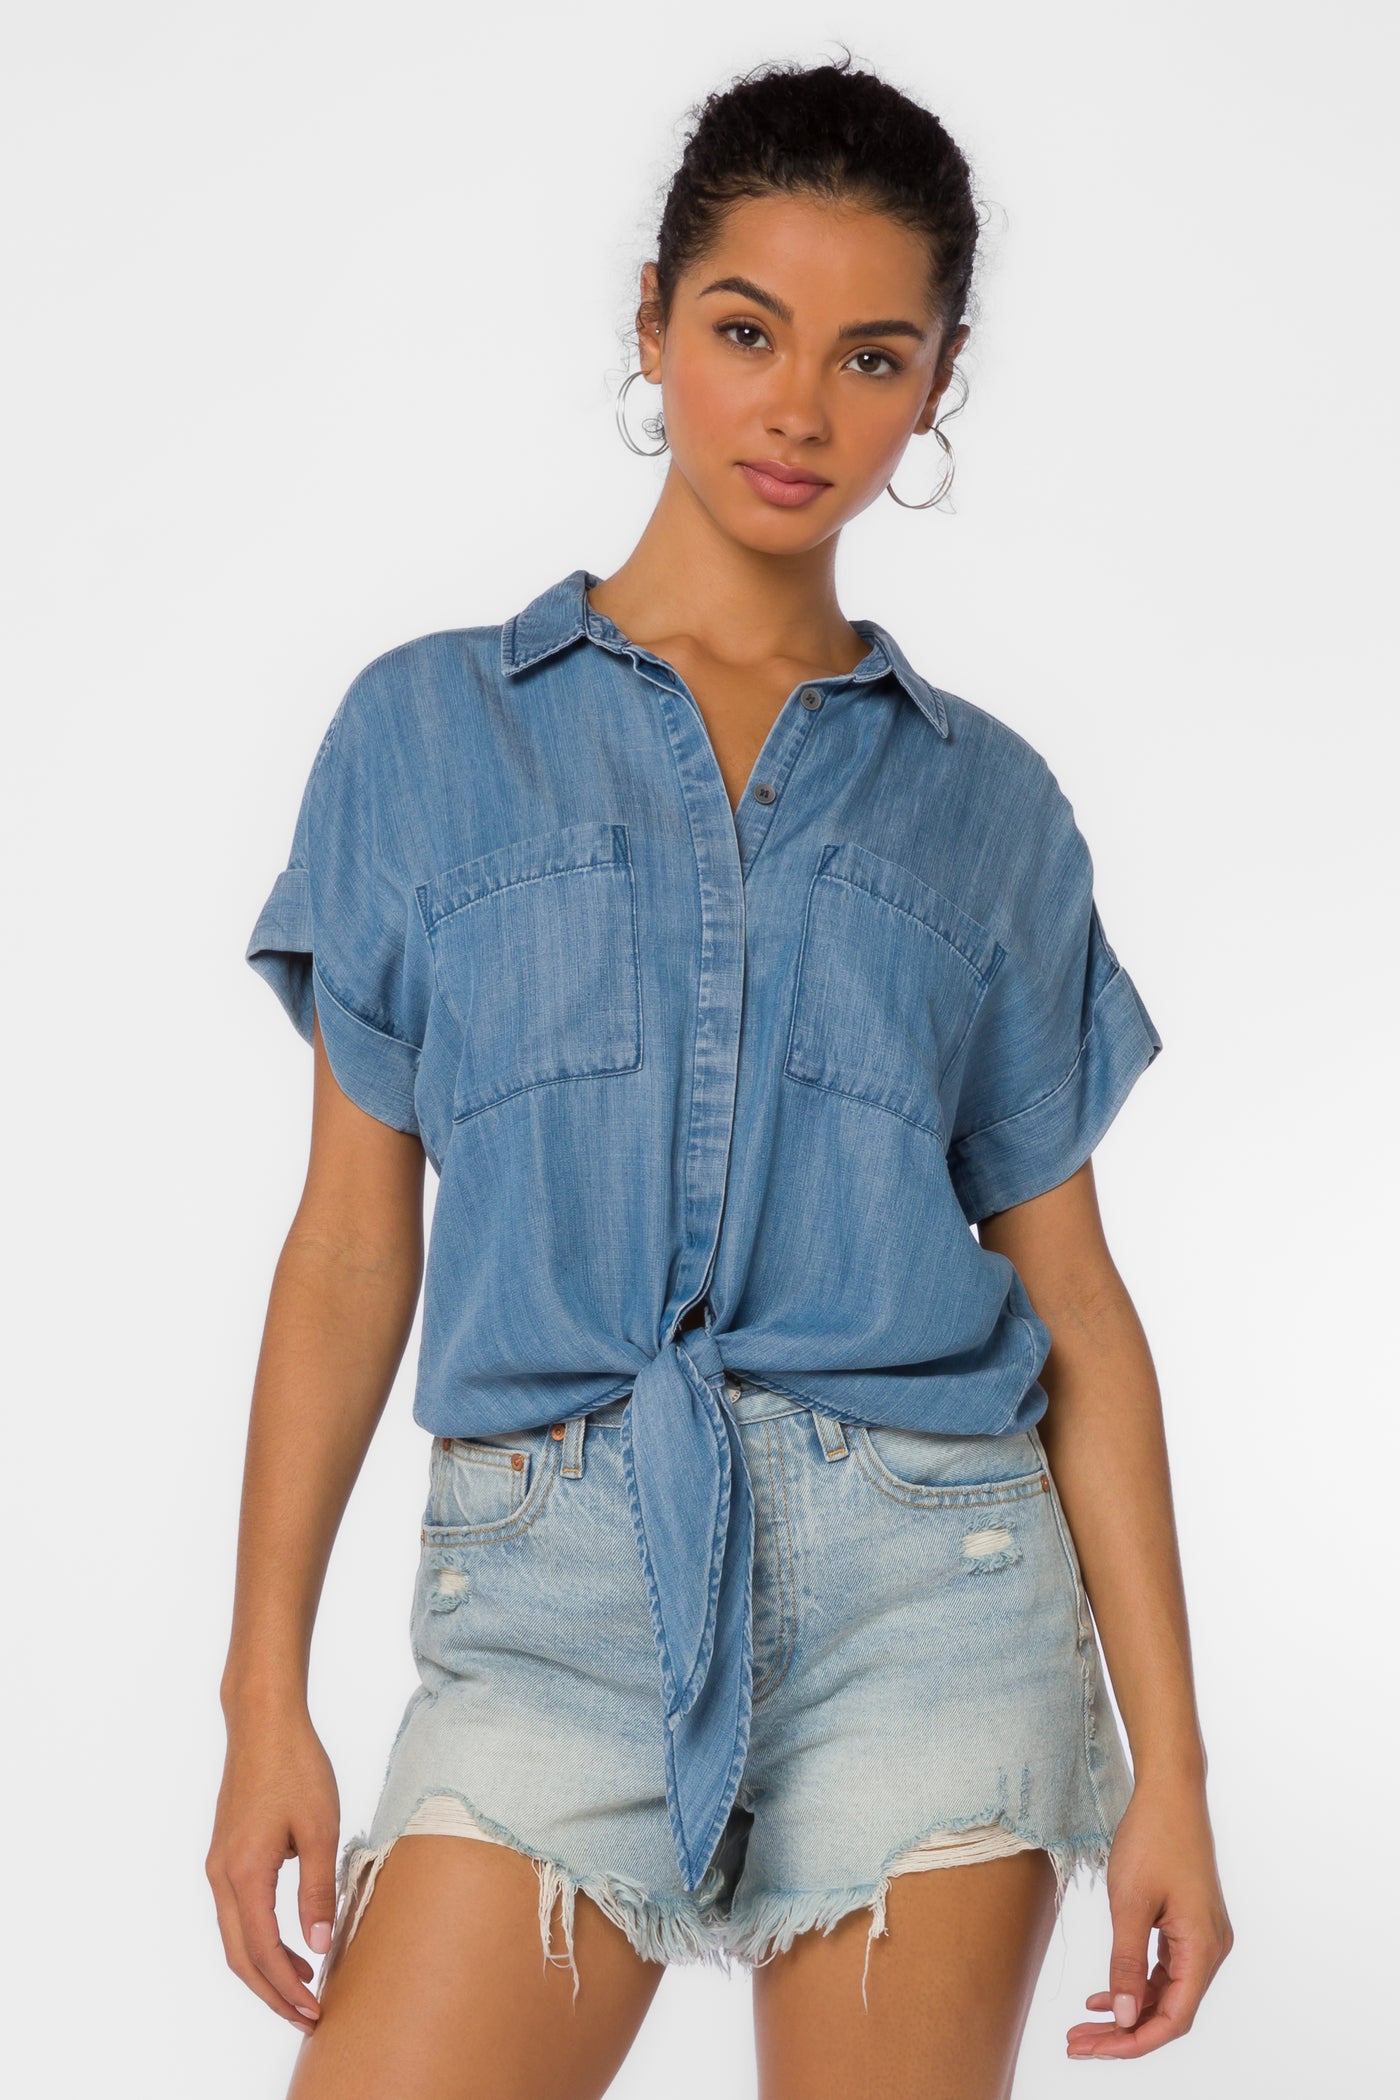 Zuria Blue Chambray Shirt - Tops - Velvet Heart Clothing